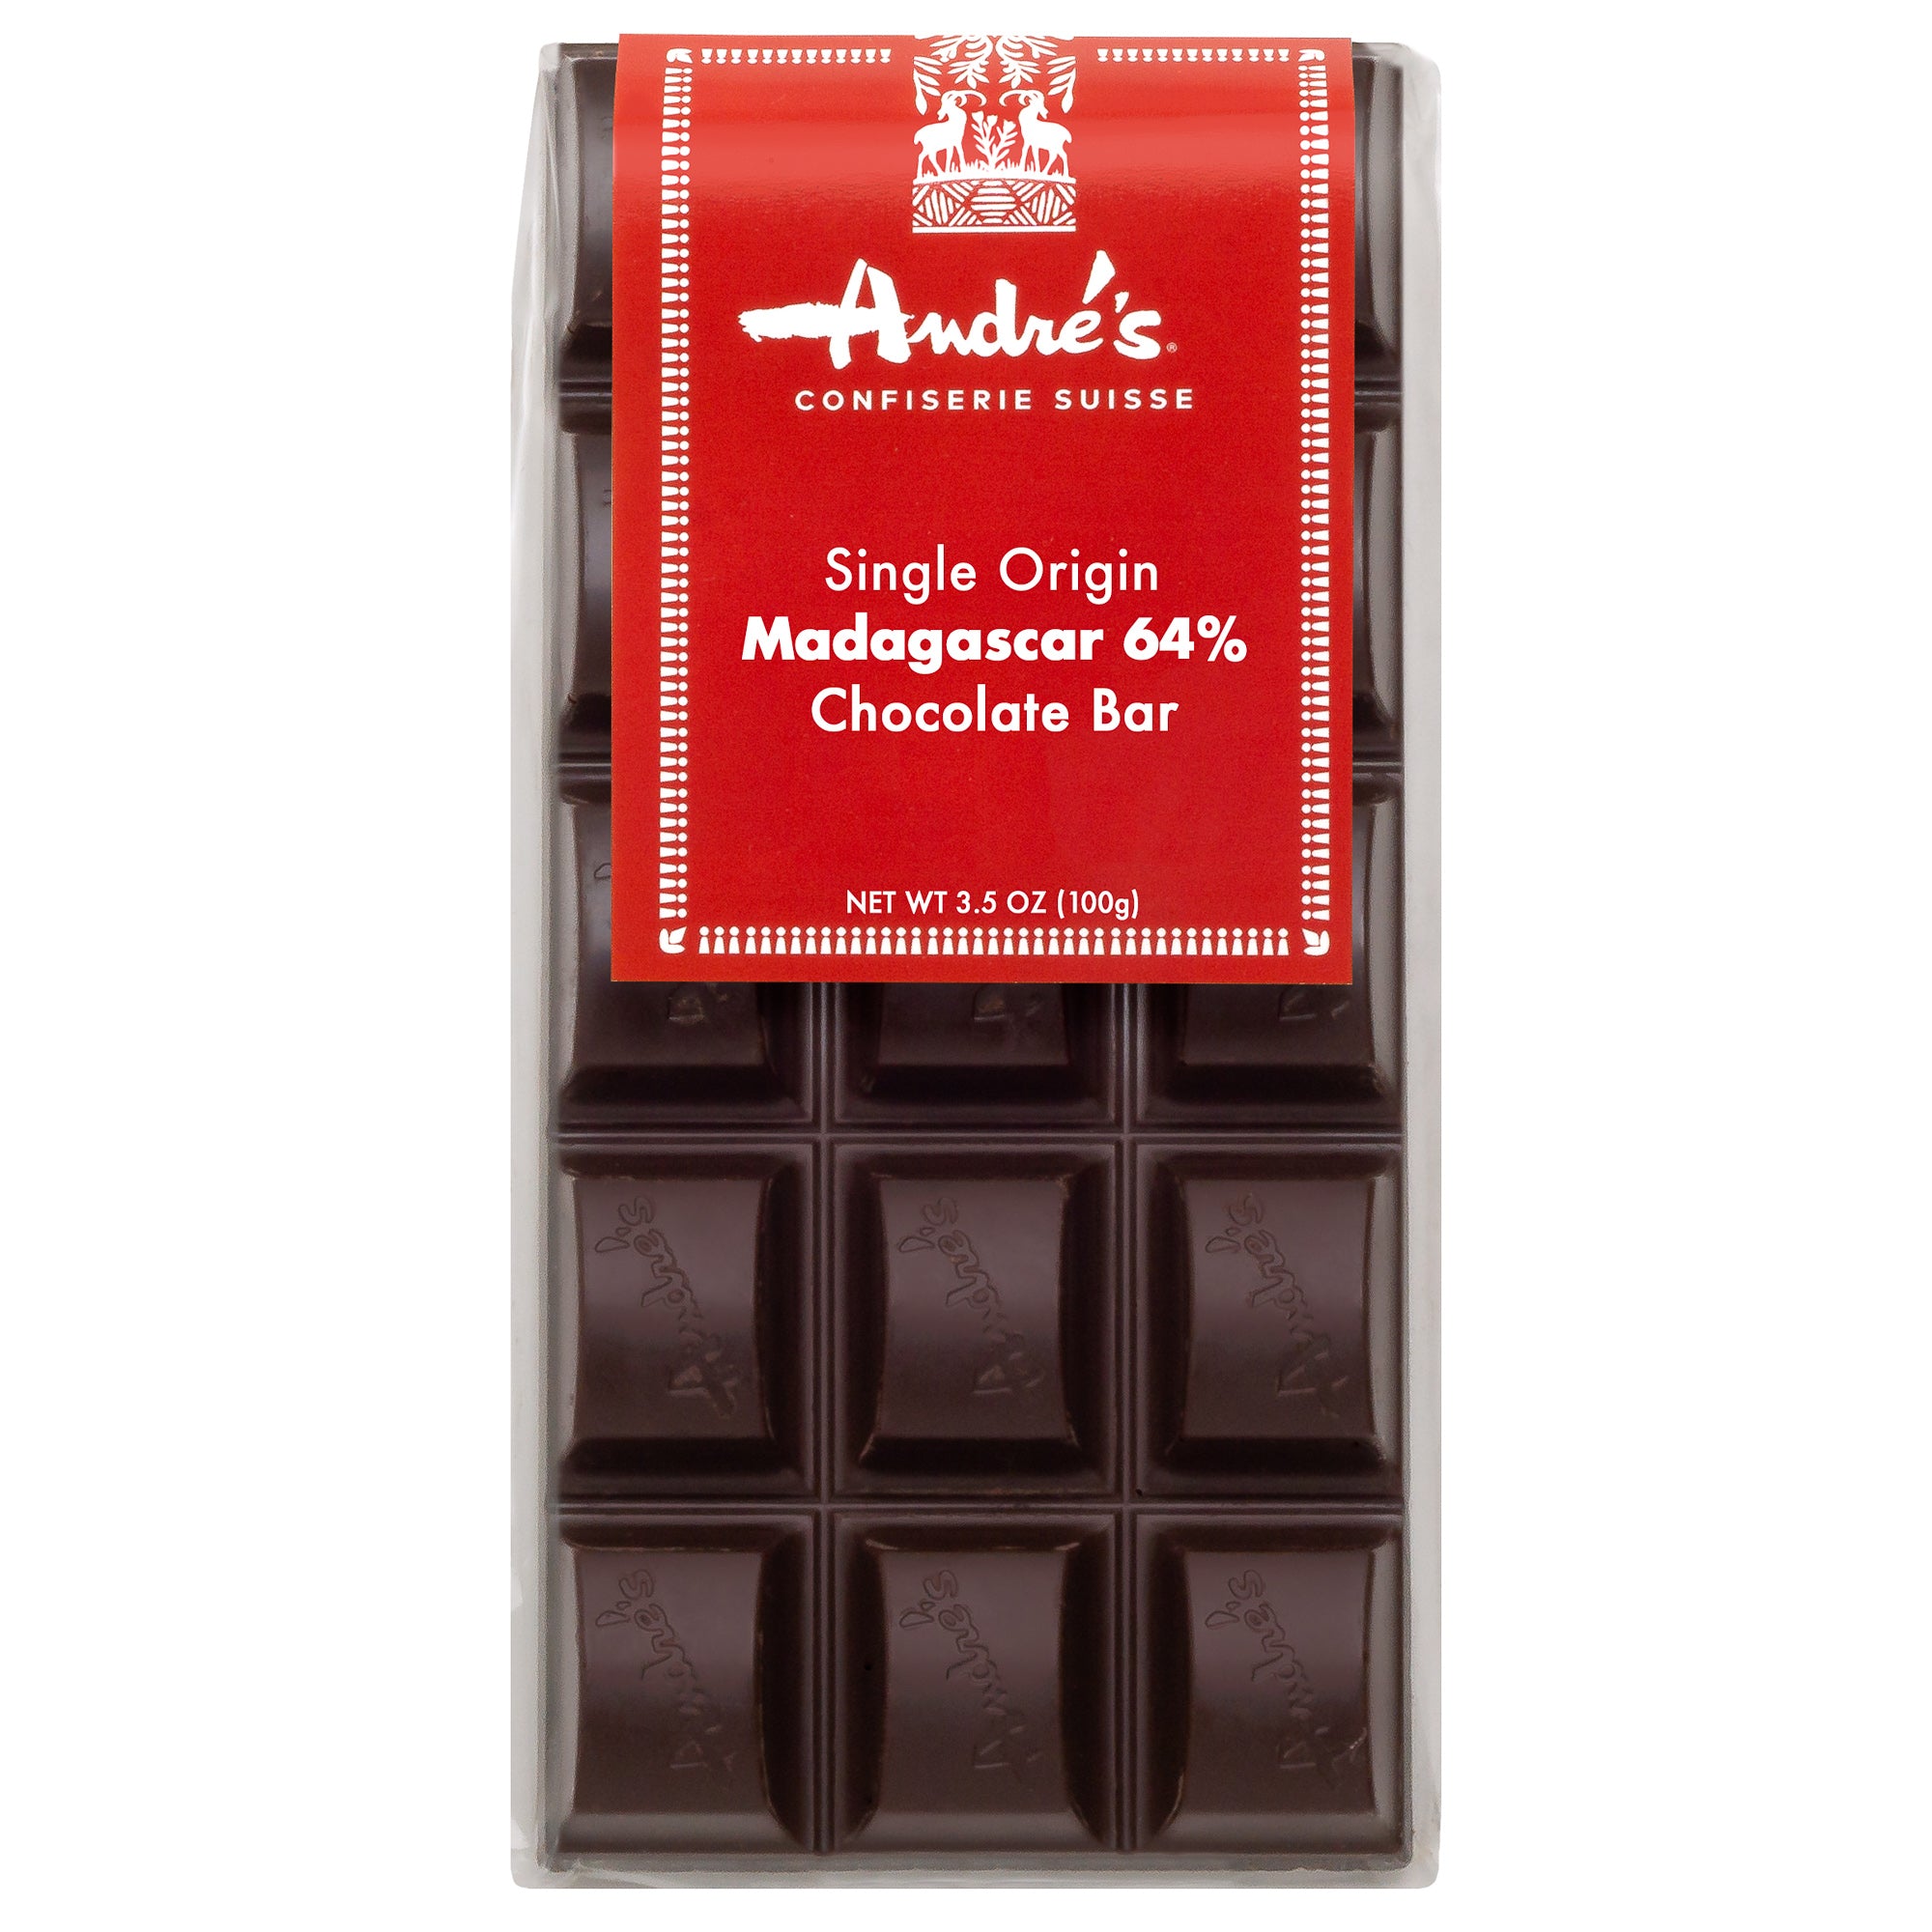 Single Origin Madagascar 64% Dark Chocolate Bar